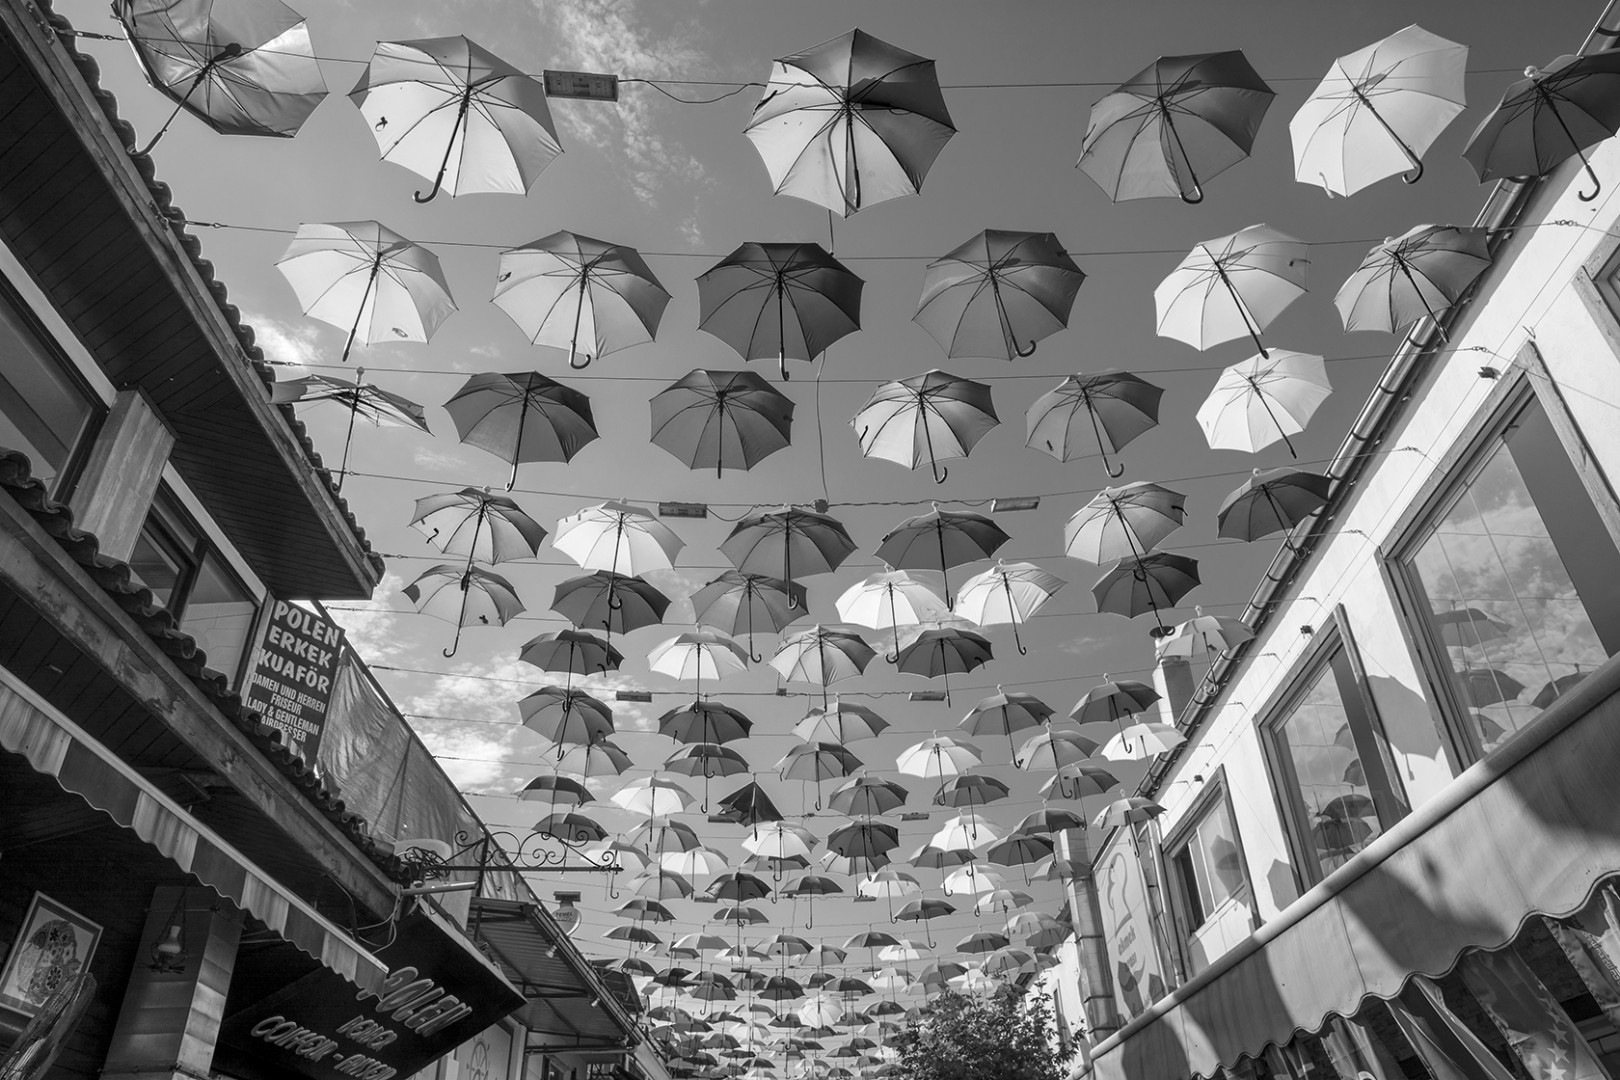 Umbrellas strung over a street in Antalya